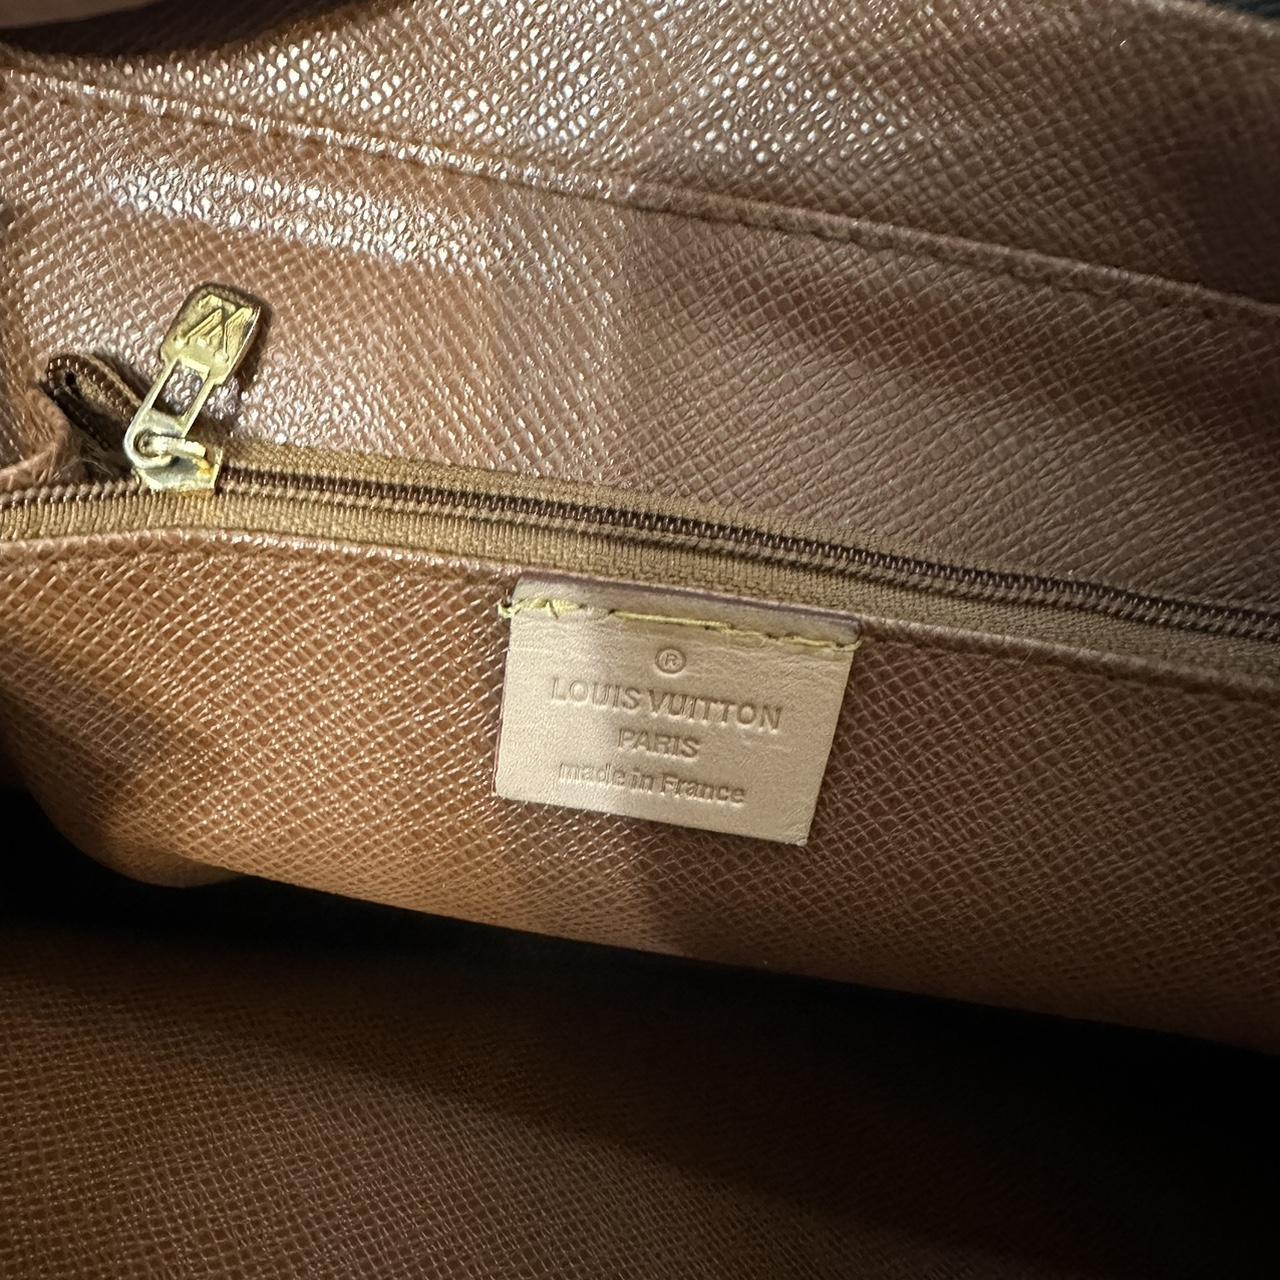 New Louis Vuitton Handbag Classic Monogram - Depop